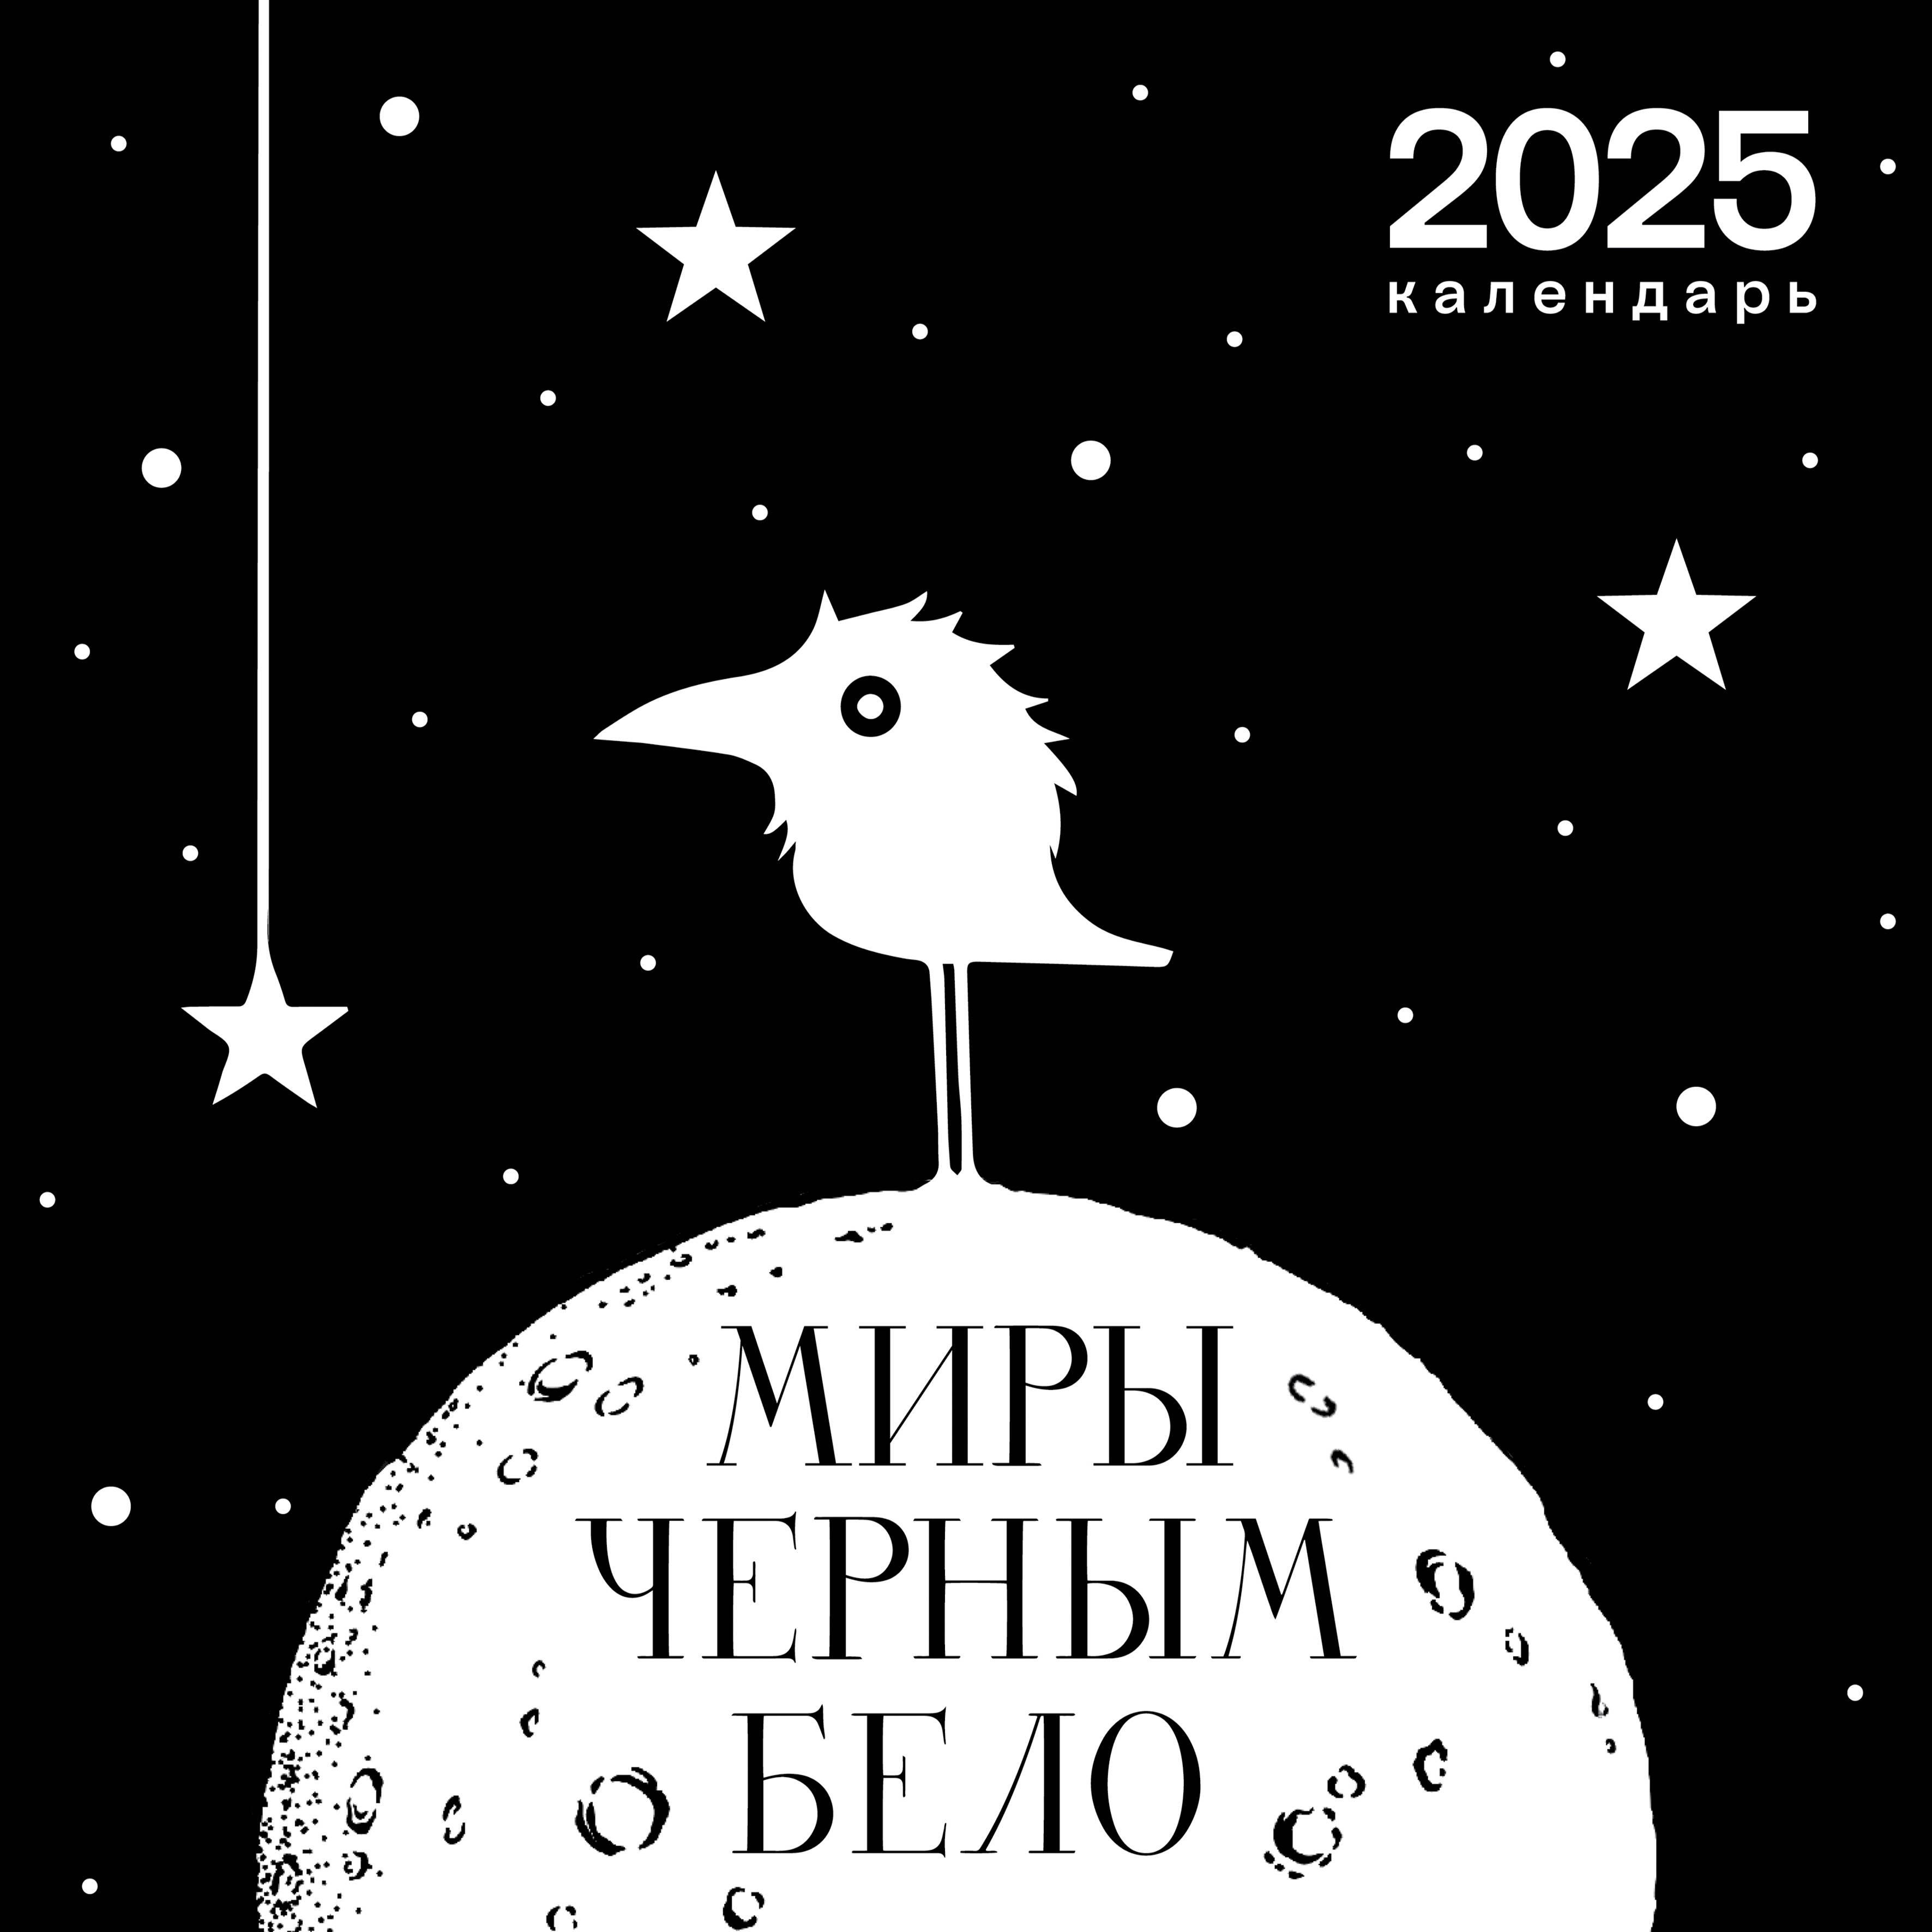 Art calendar 2025. Worlds "Black and white"